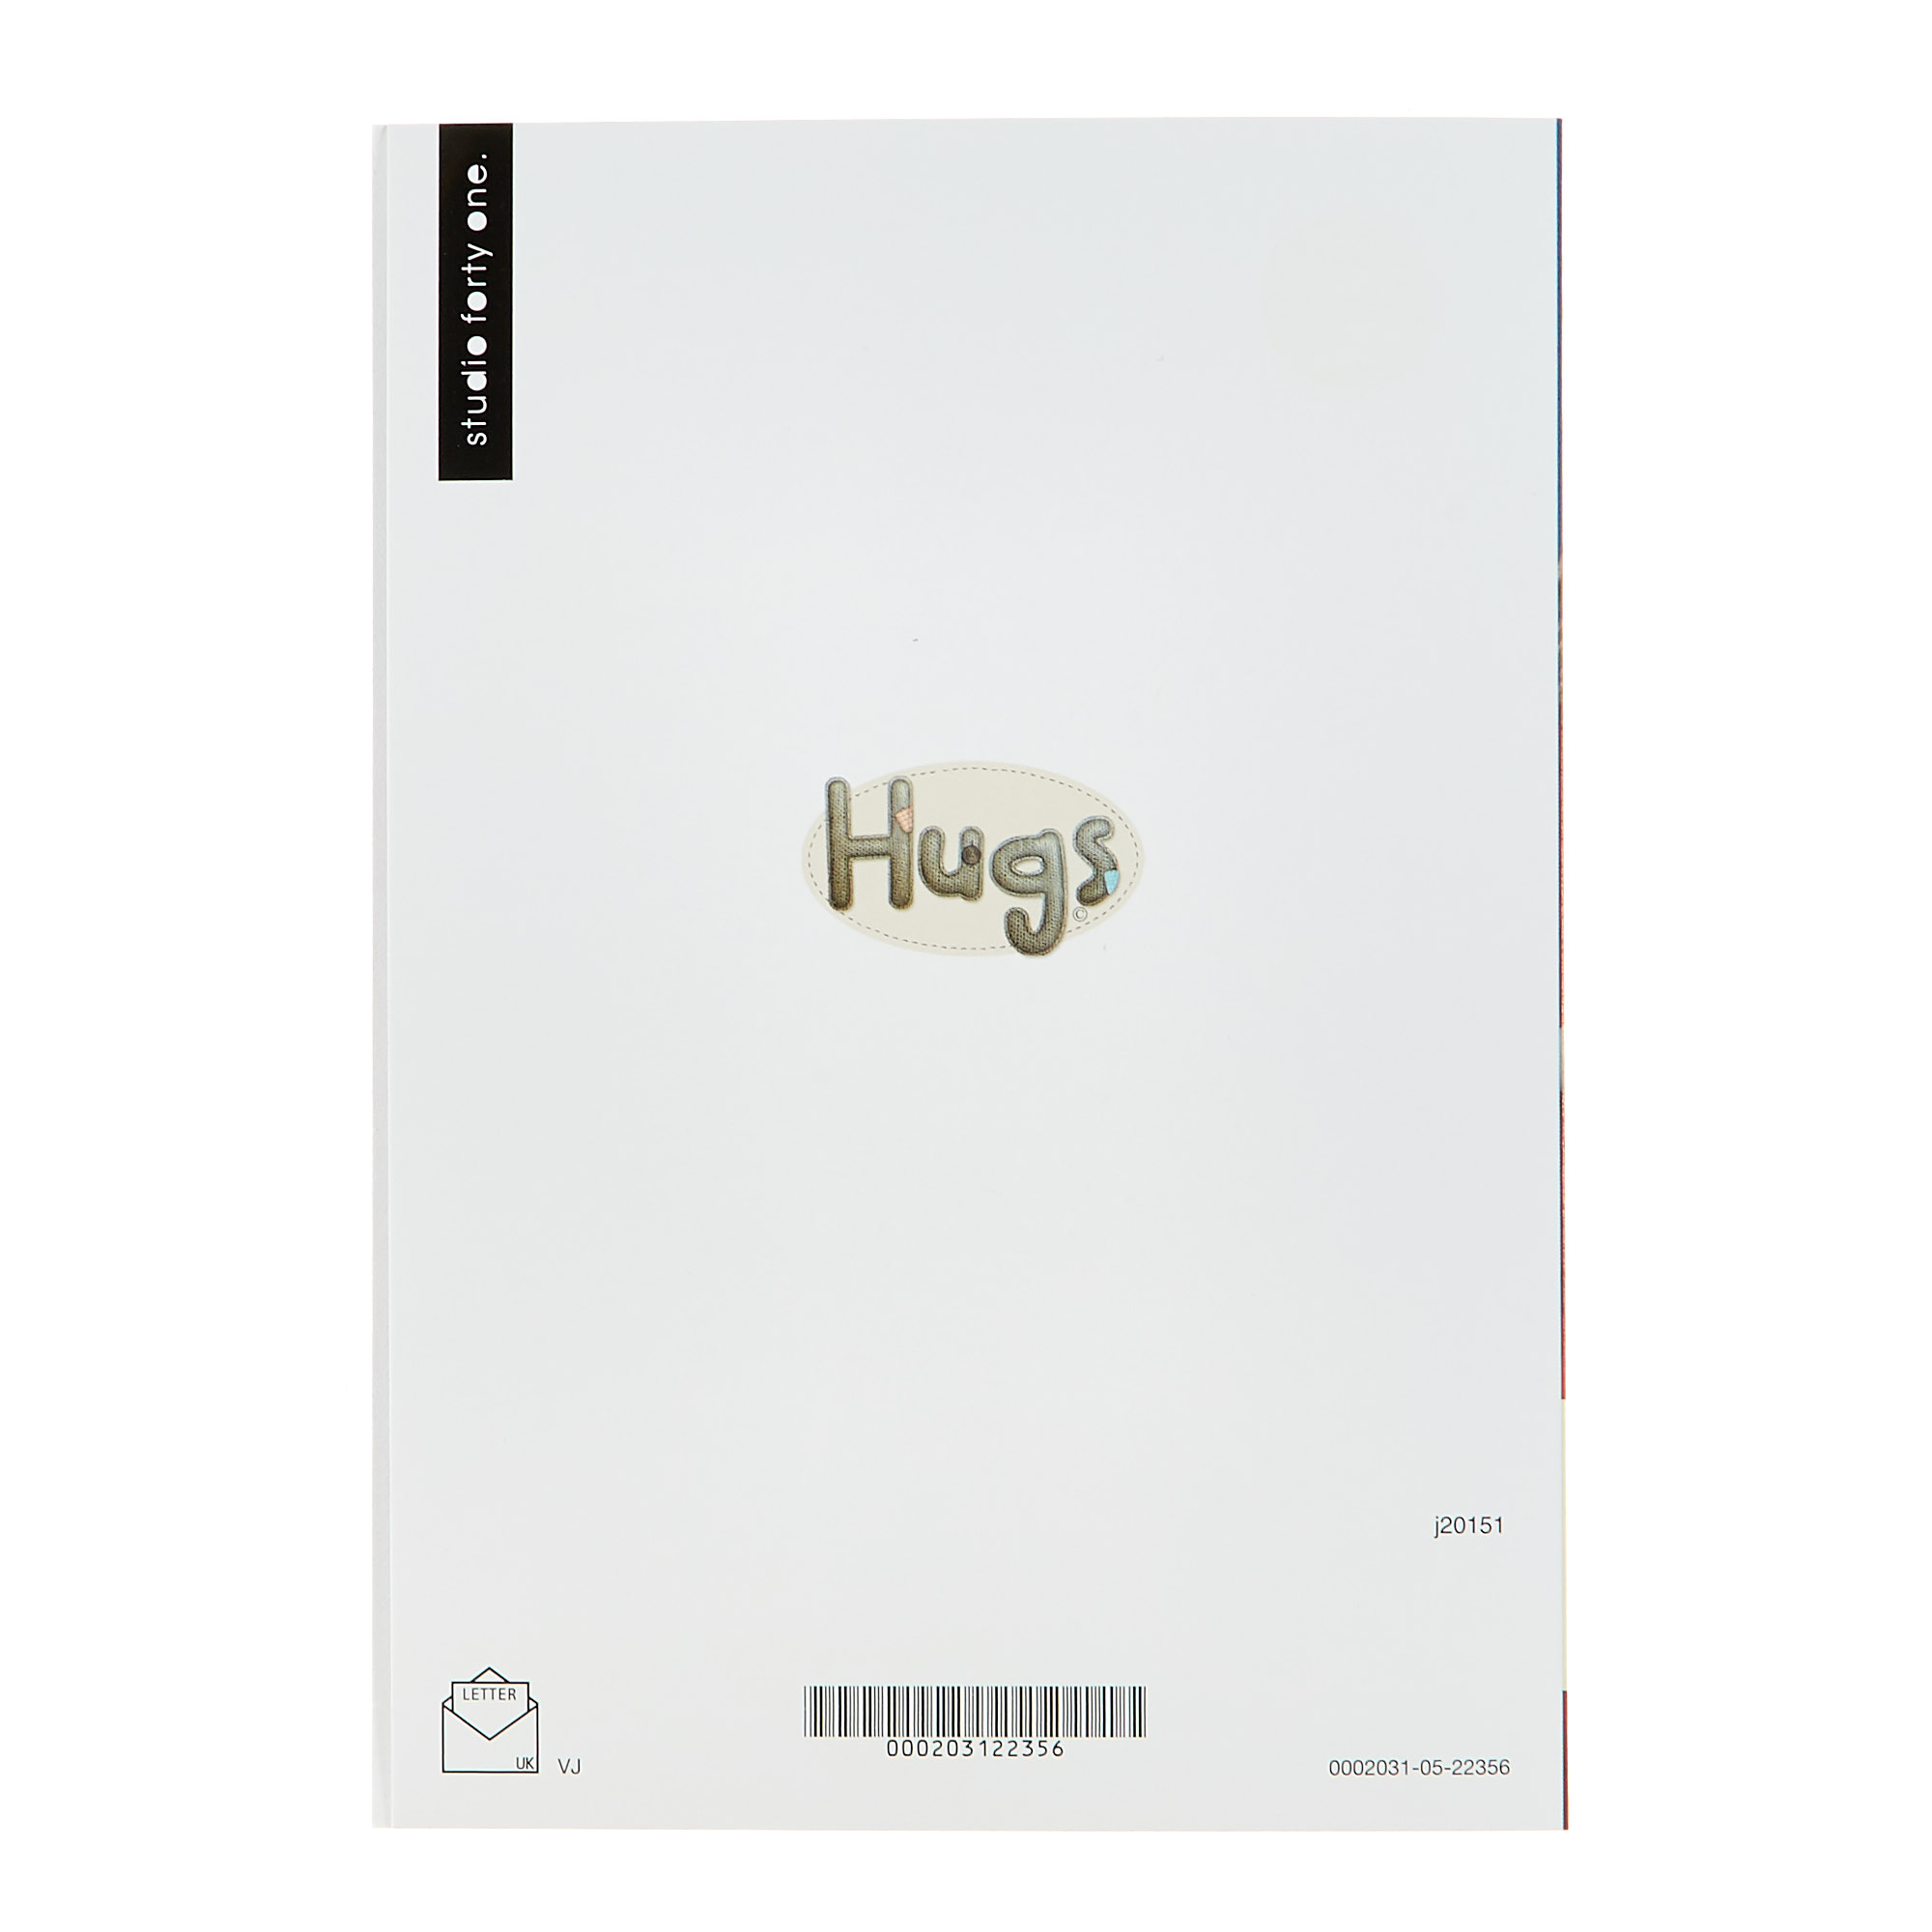 Hugs Bear Birthday Cards - Pop Corn (Pack of 12)